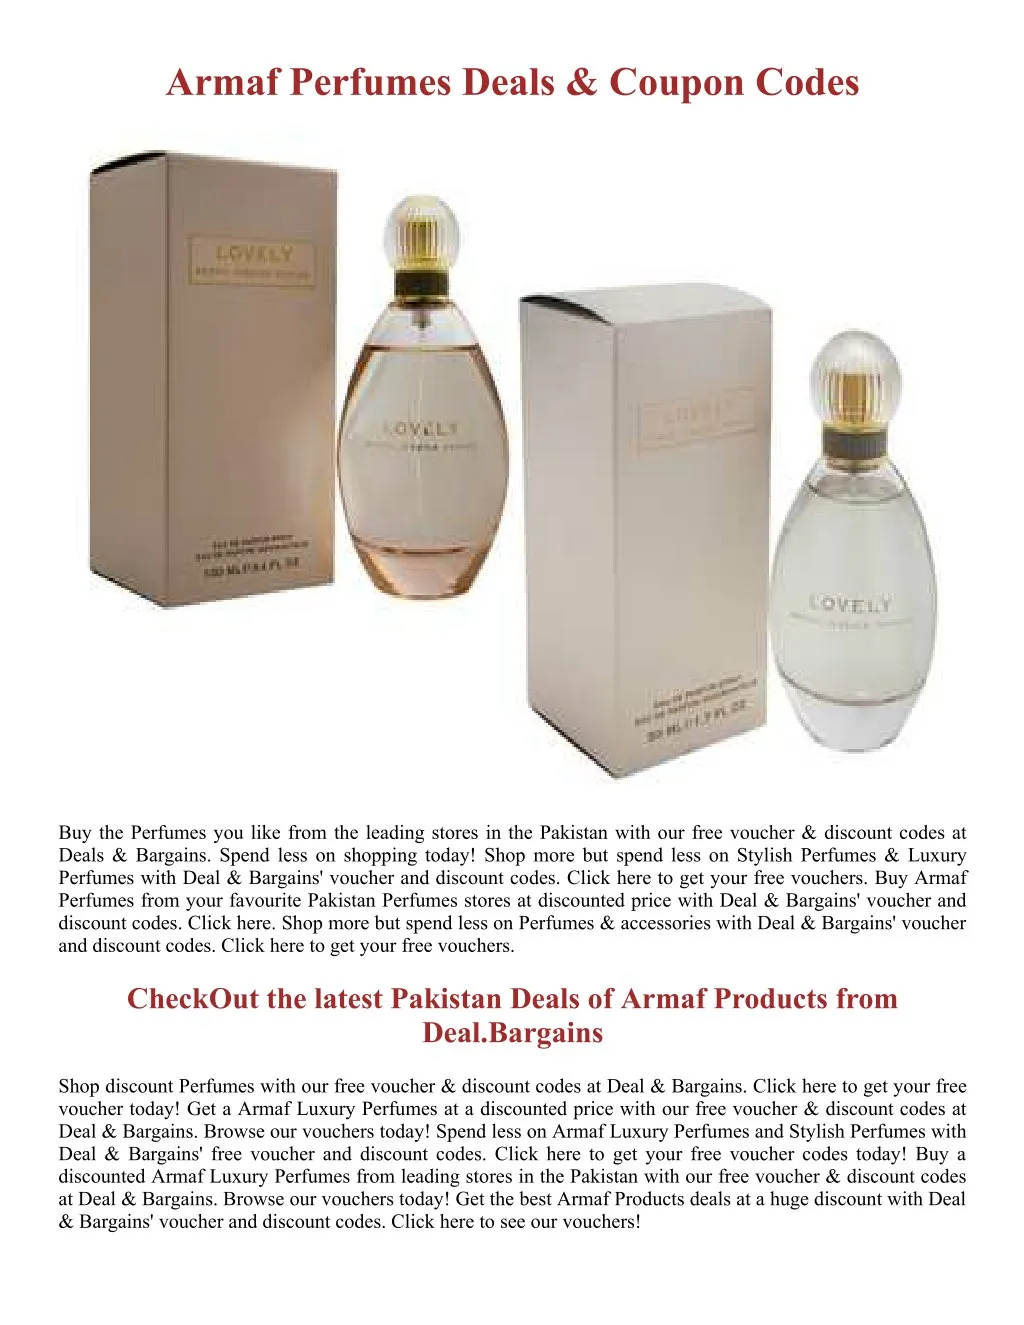 armaf perfumes deals coupon codes